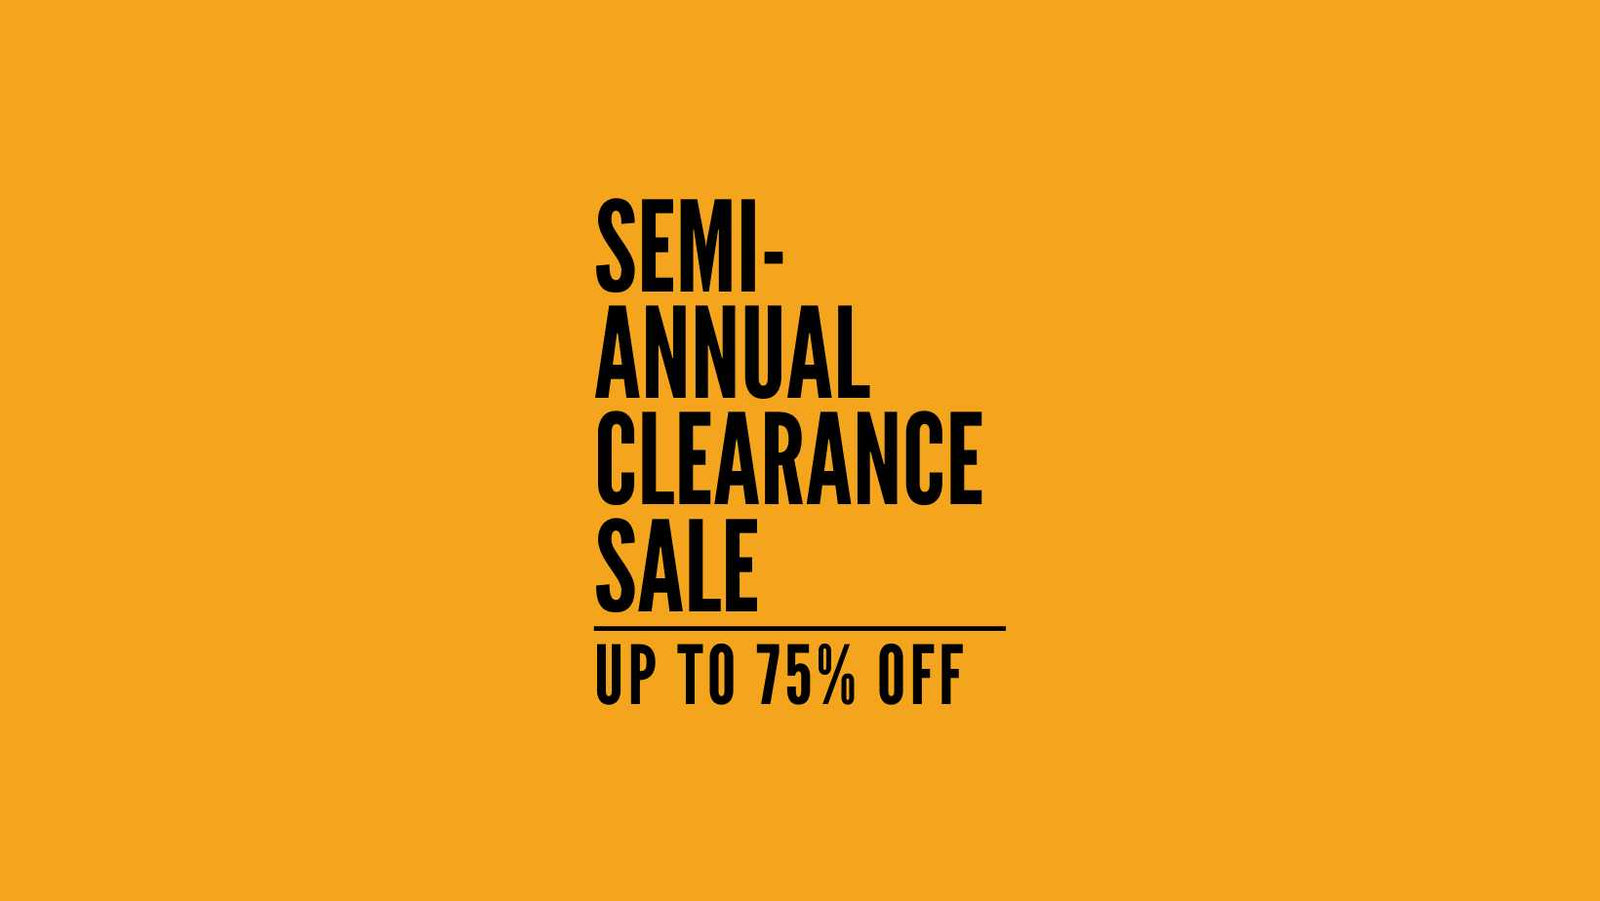 Semi-Annual Clearance Sale in progress! - Yarn Folk